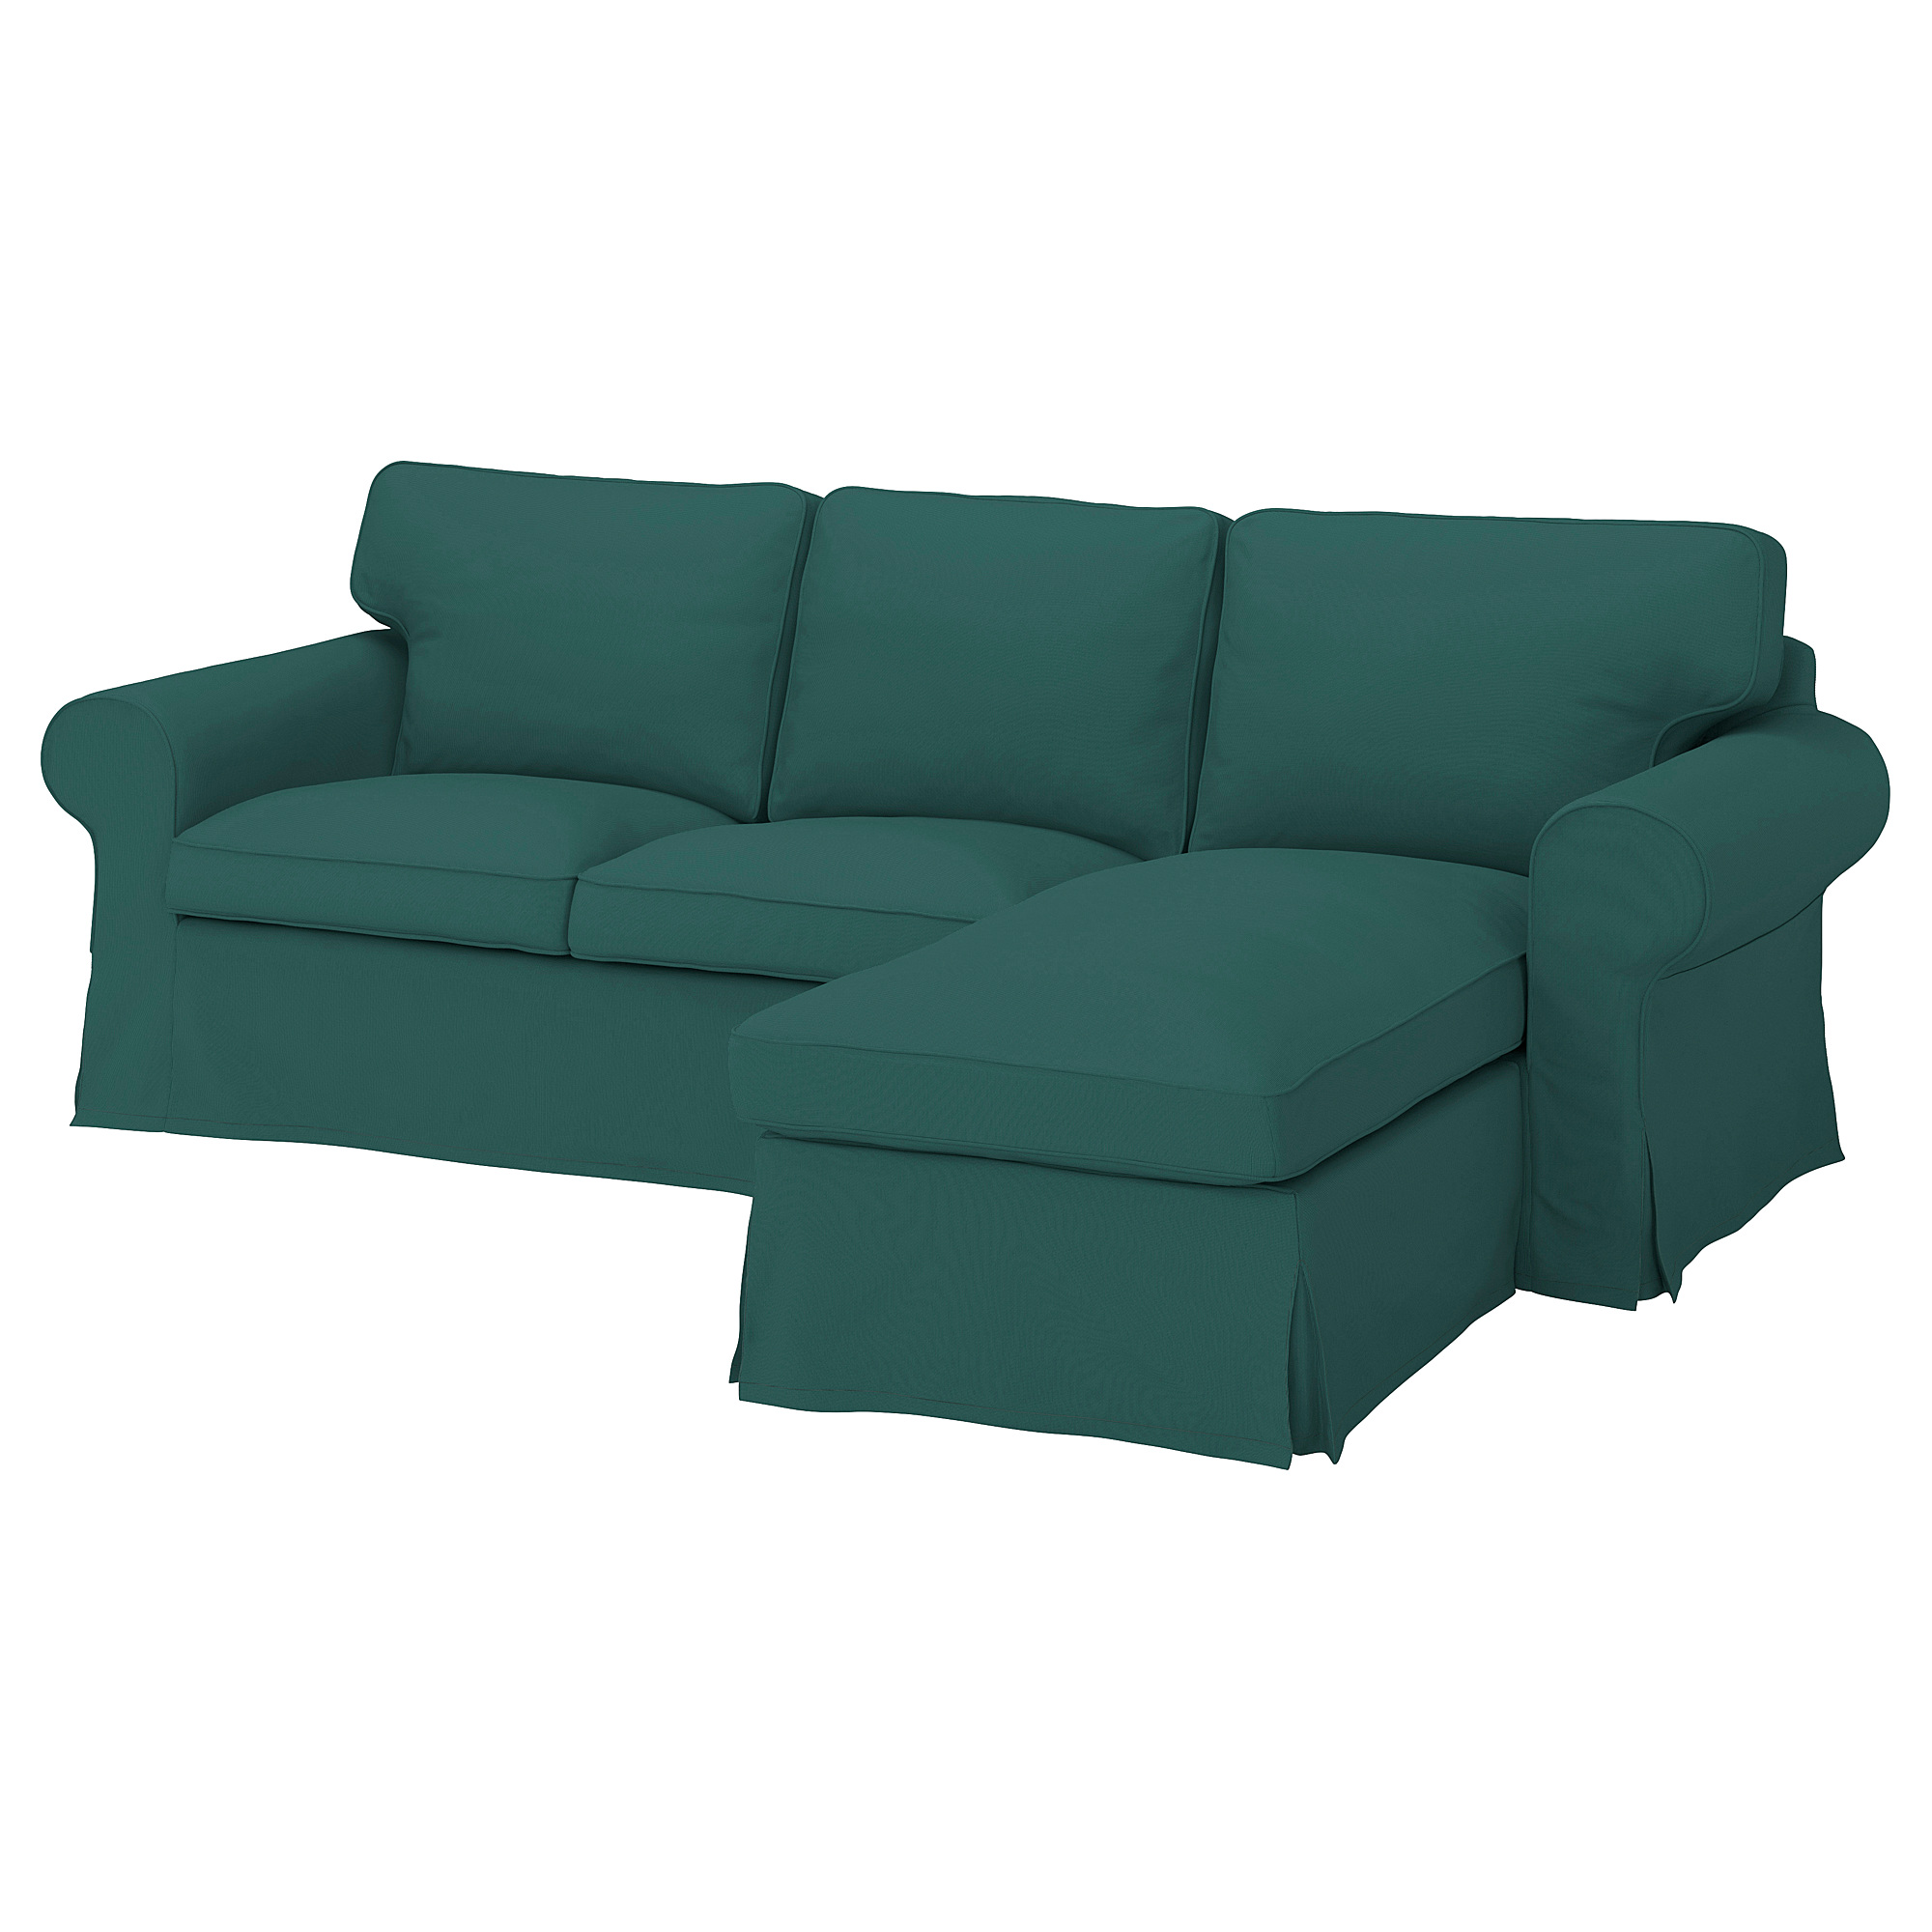 EKTORP 3-seat sofa with chaise longue